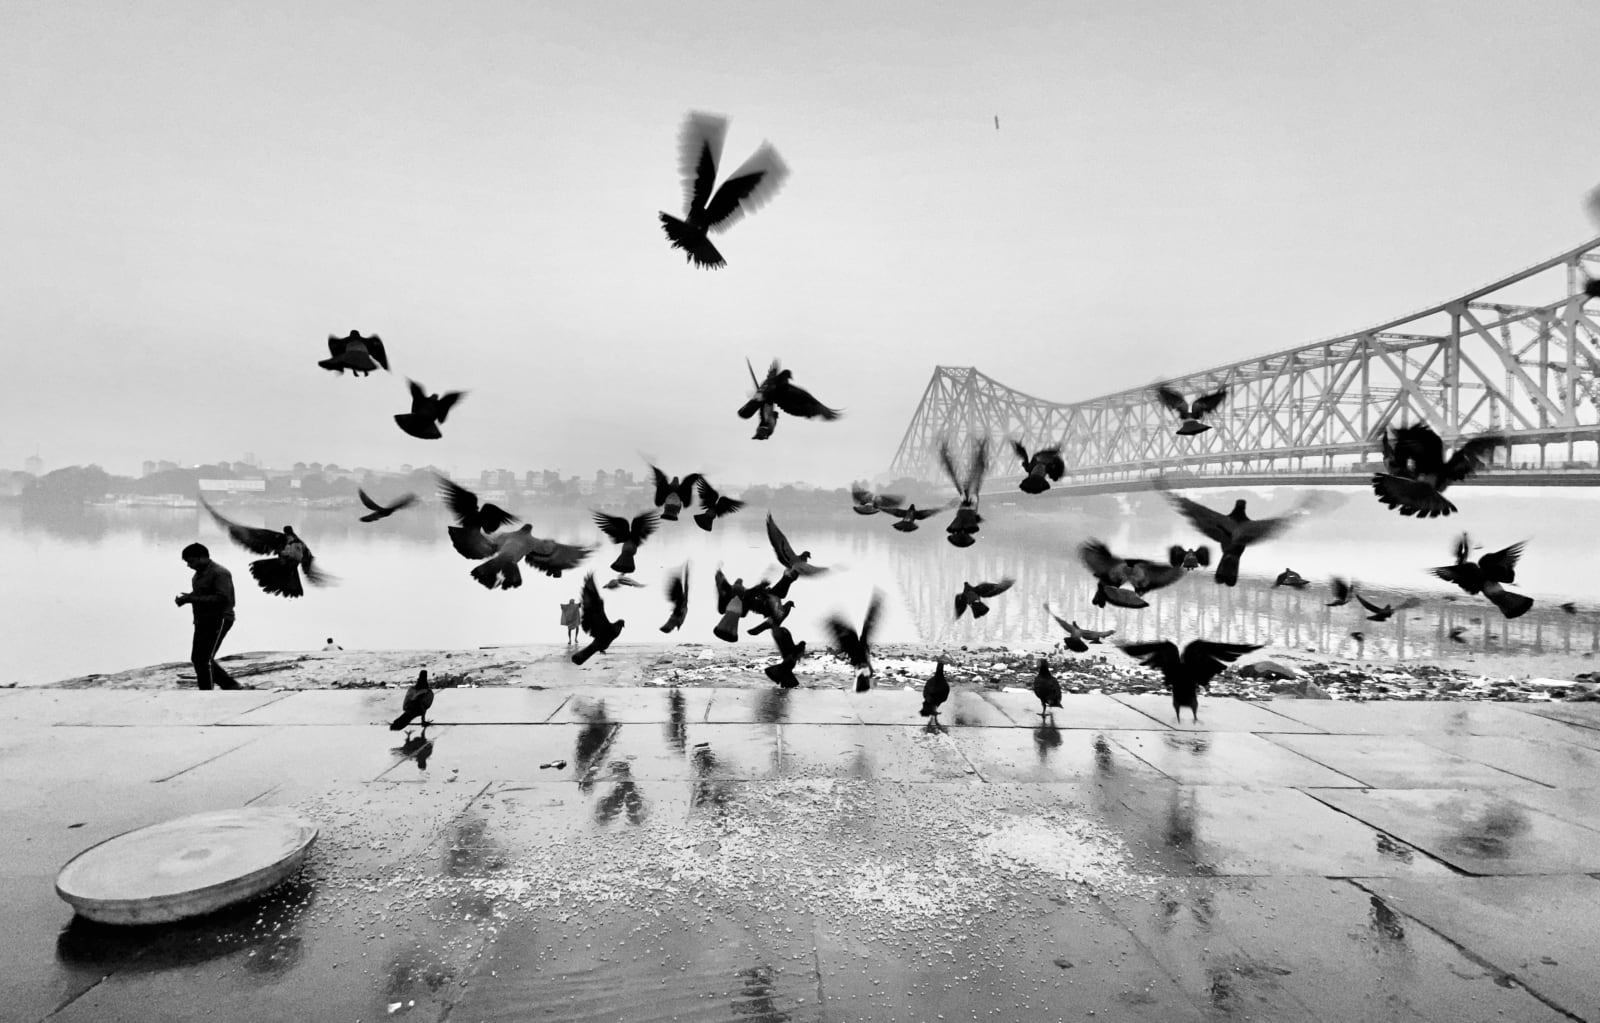 The Birds of the Sky